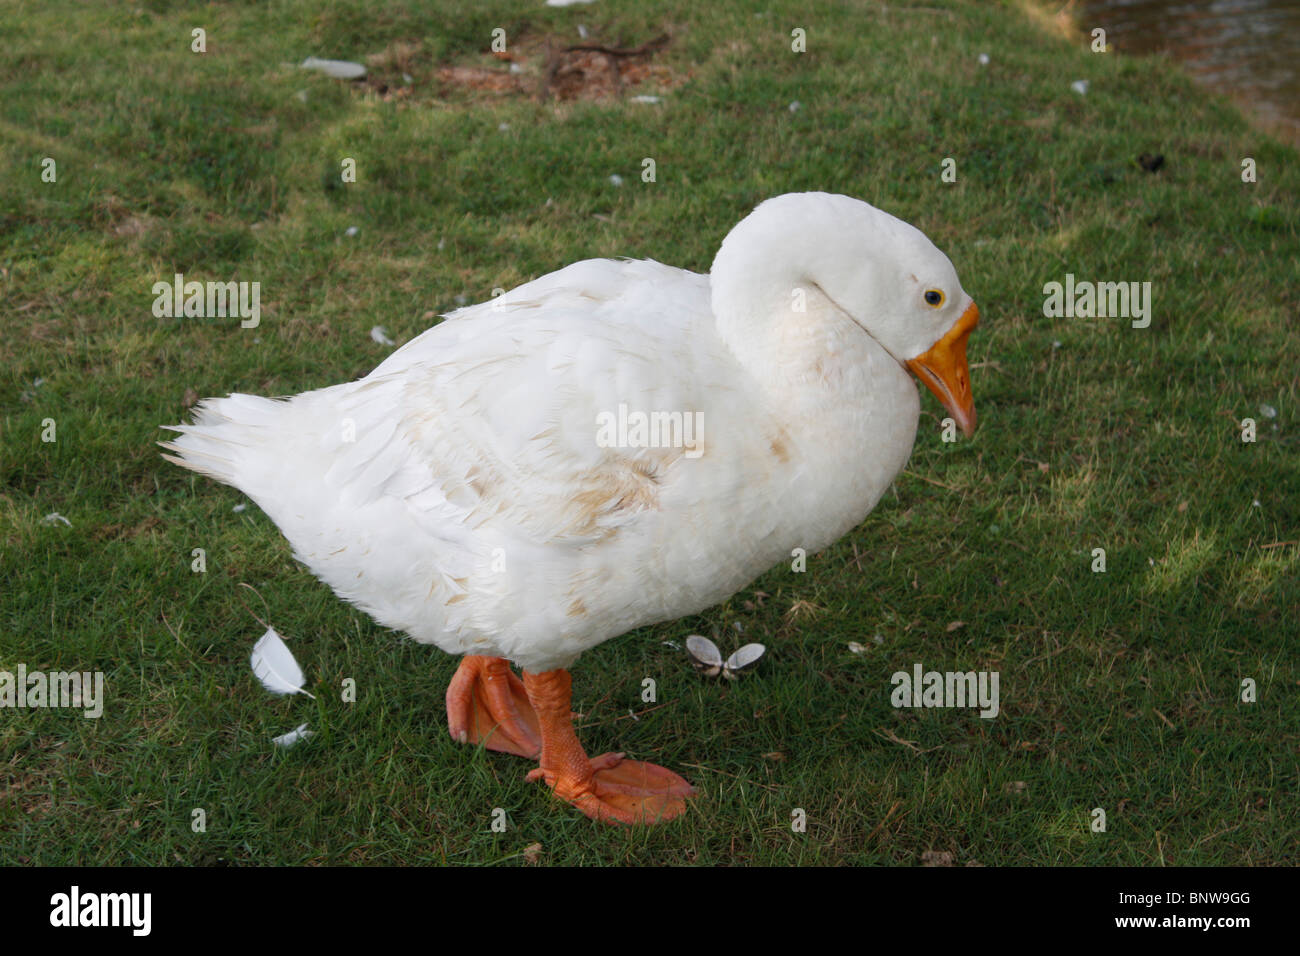 Duck palmati piedi a piedi di uccelli in erba Foto Stock